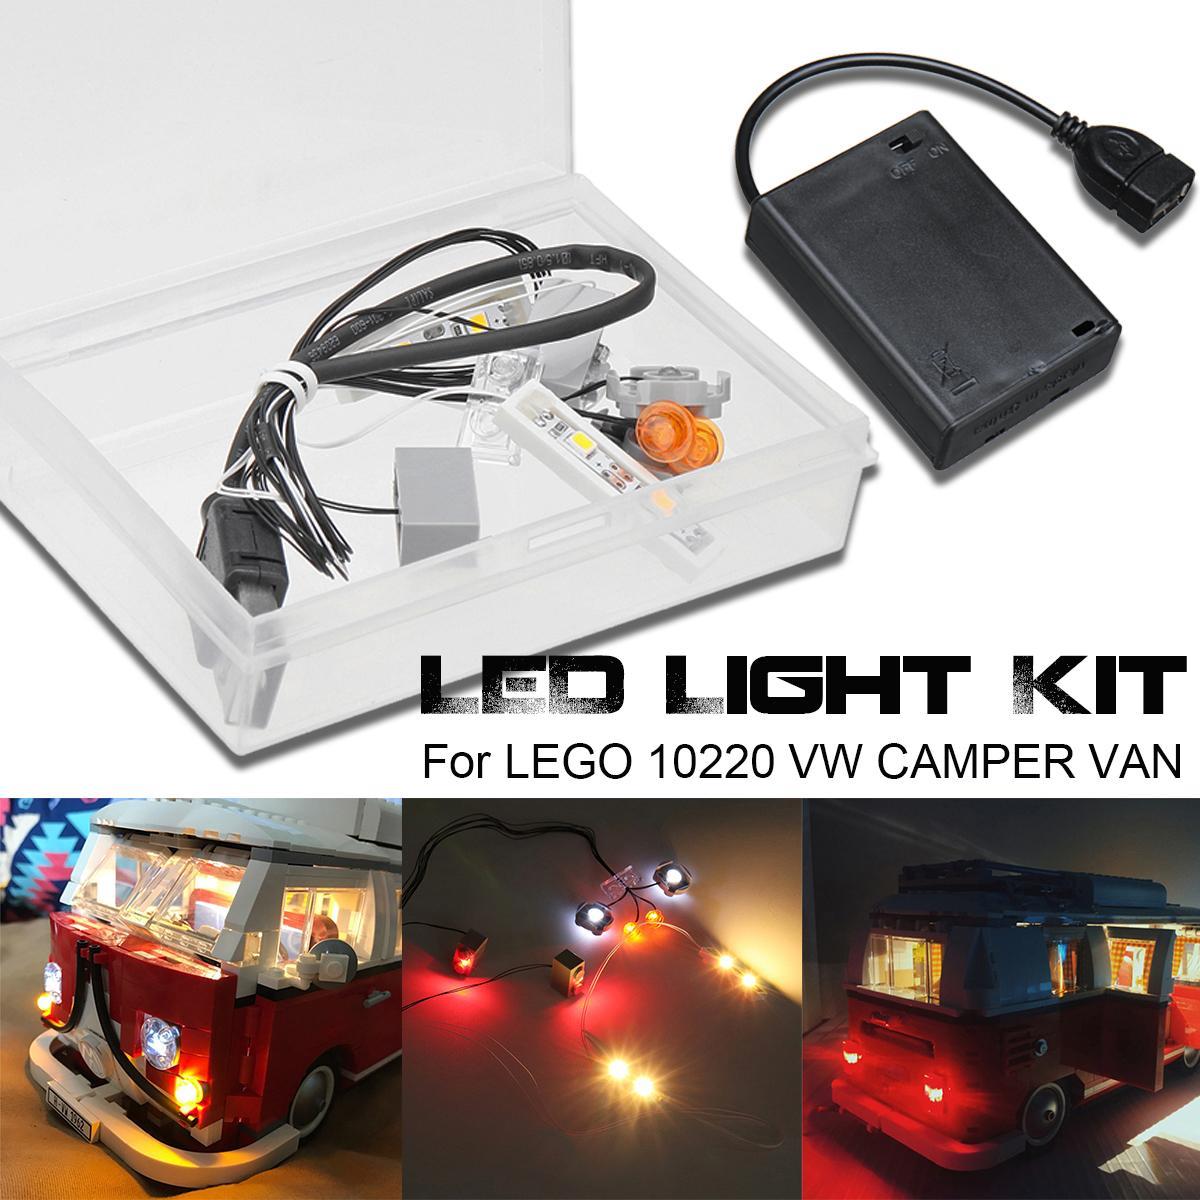 DIY LED Light ONLY Lighting Kit DIY For LEGO 10220 VW CAMPER VAN USB Interface